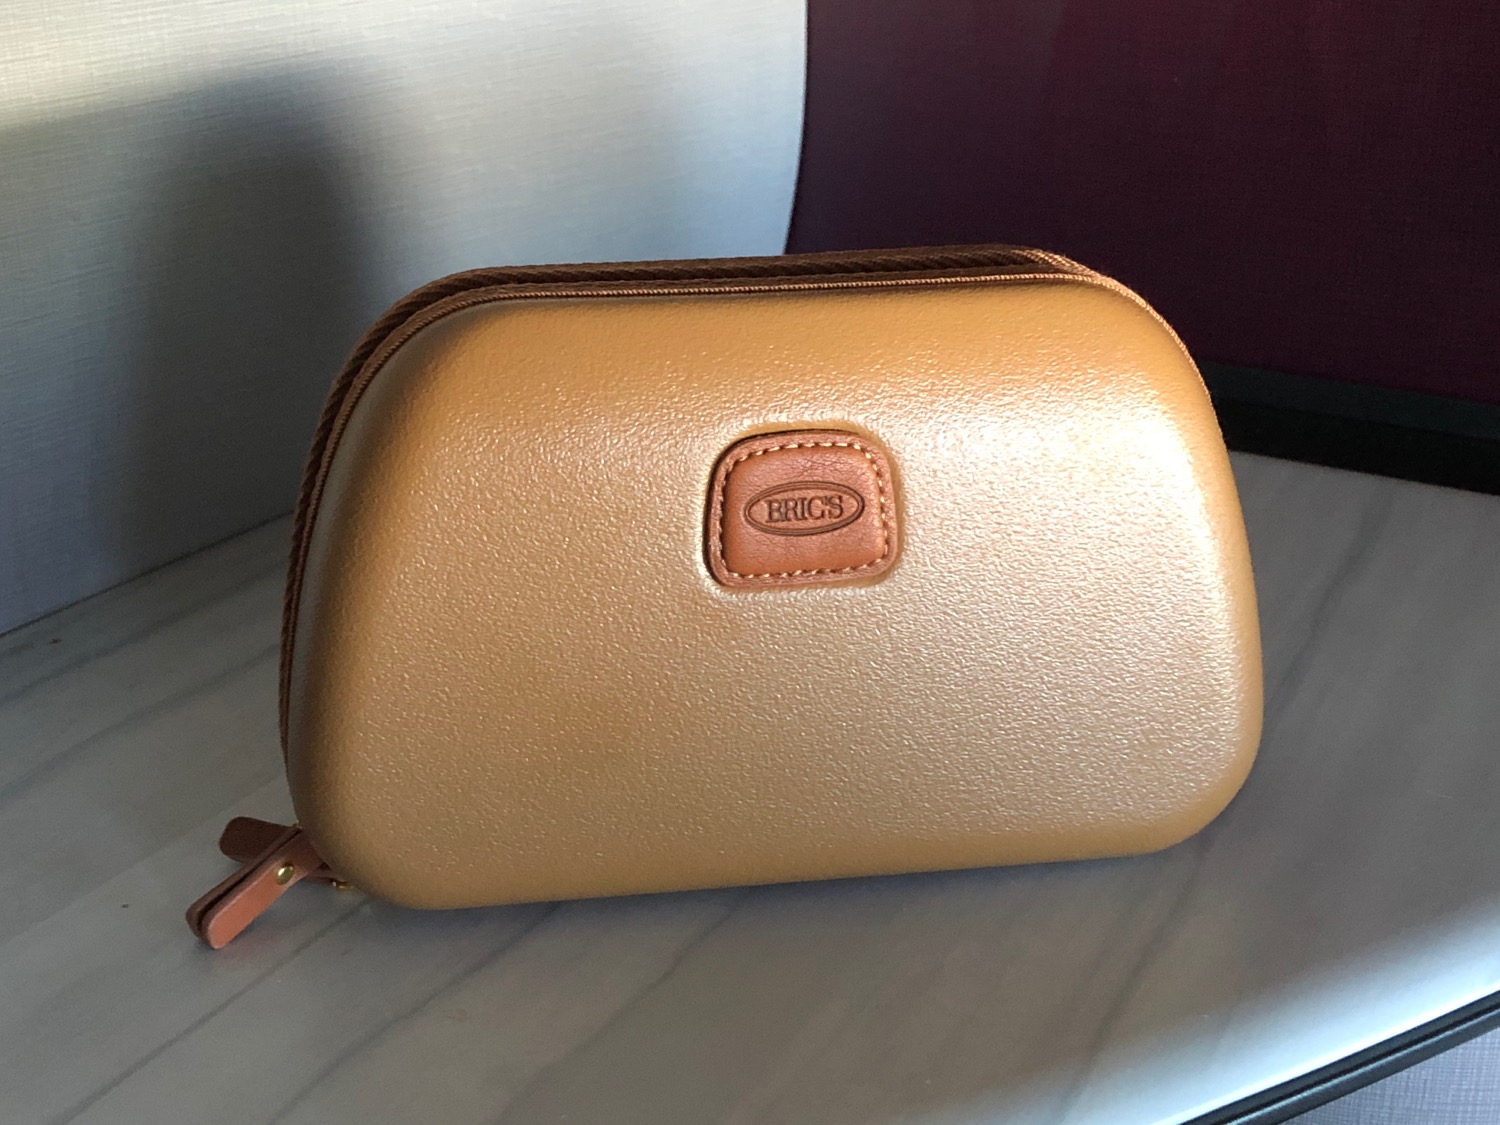 a small brown and tan bag